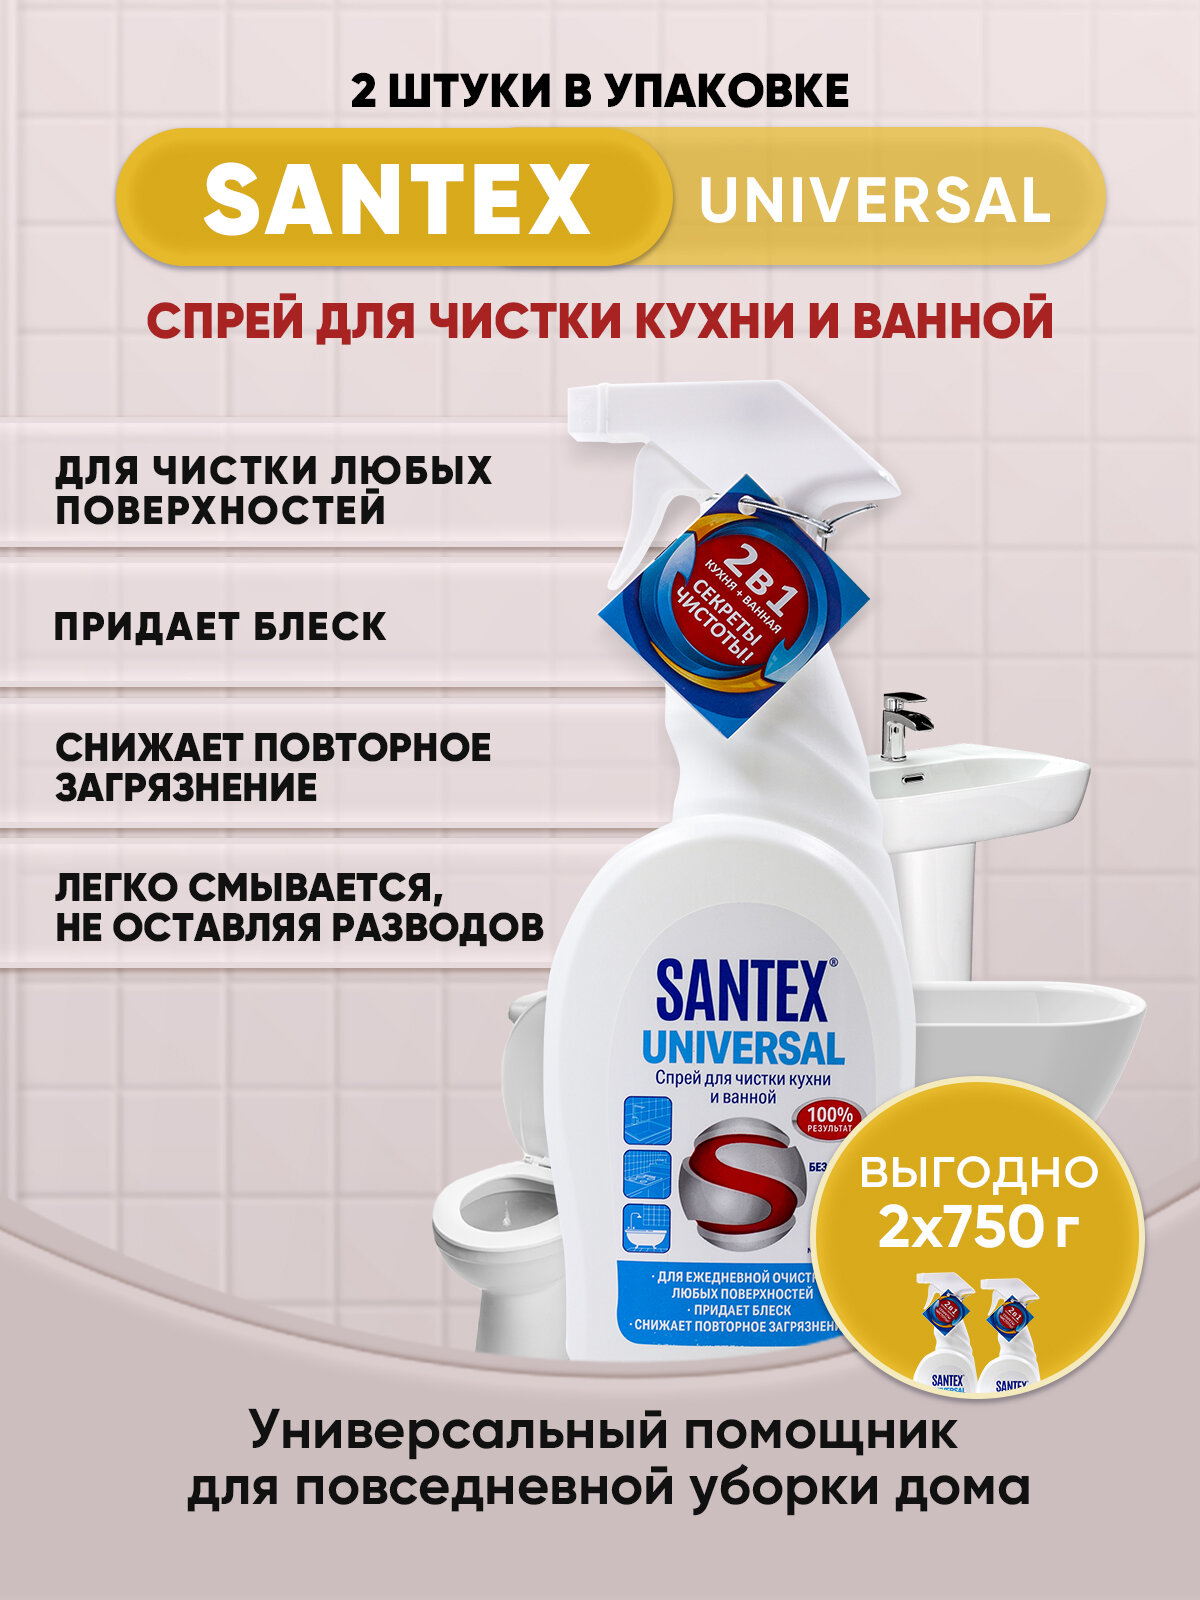 SANTEX UNIVERSAL спрей для чистки кухни ванной 750гр/2шт